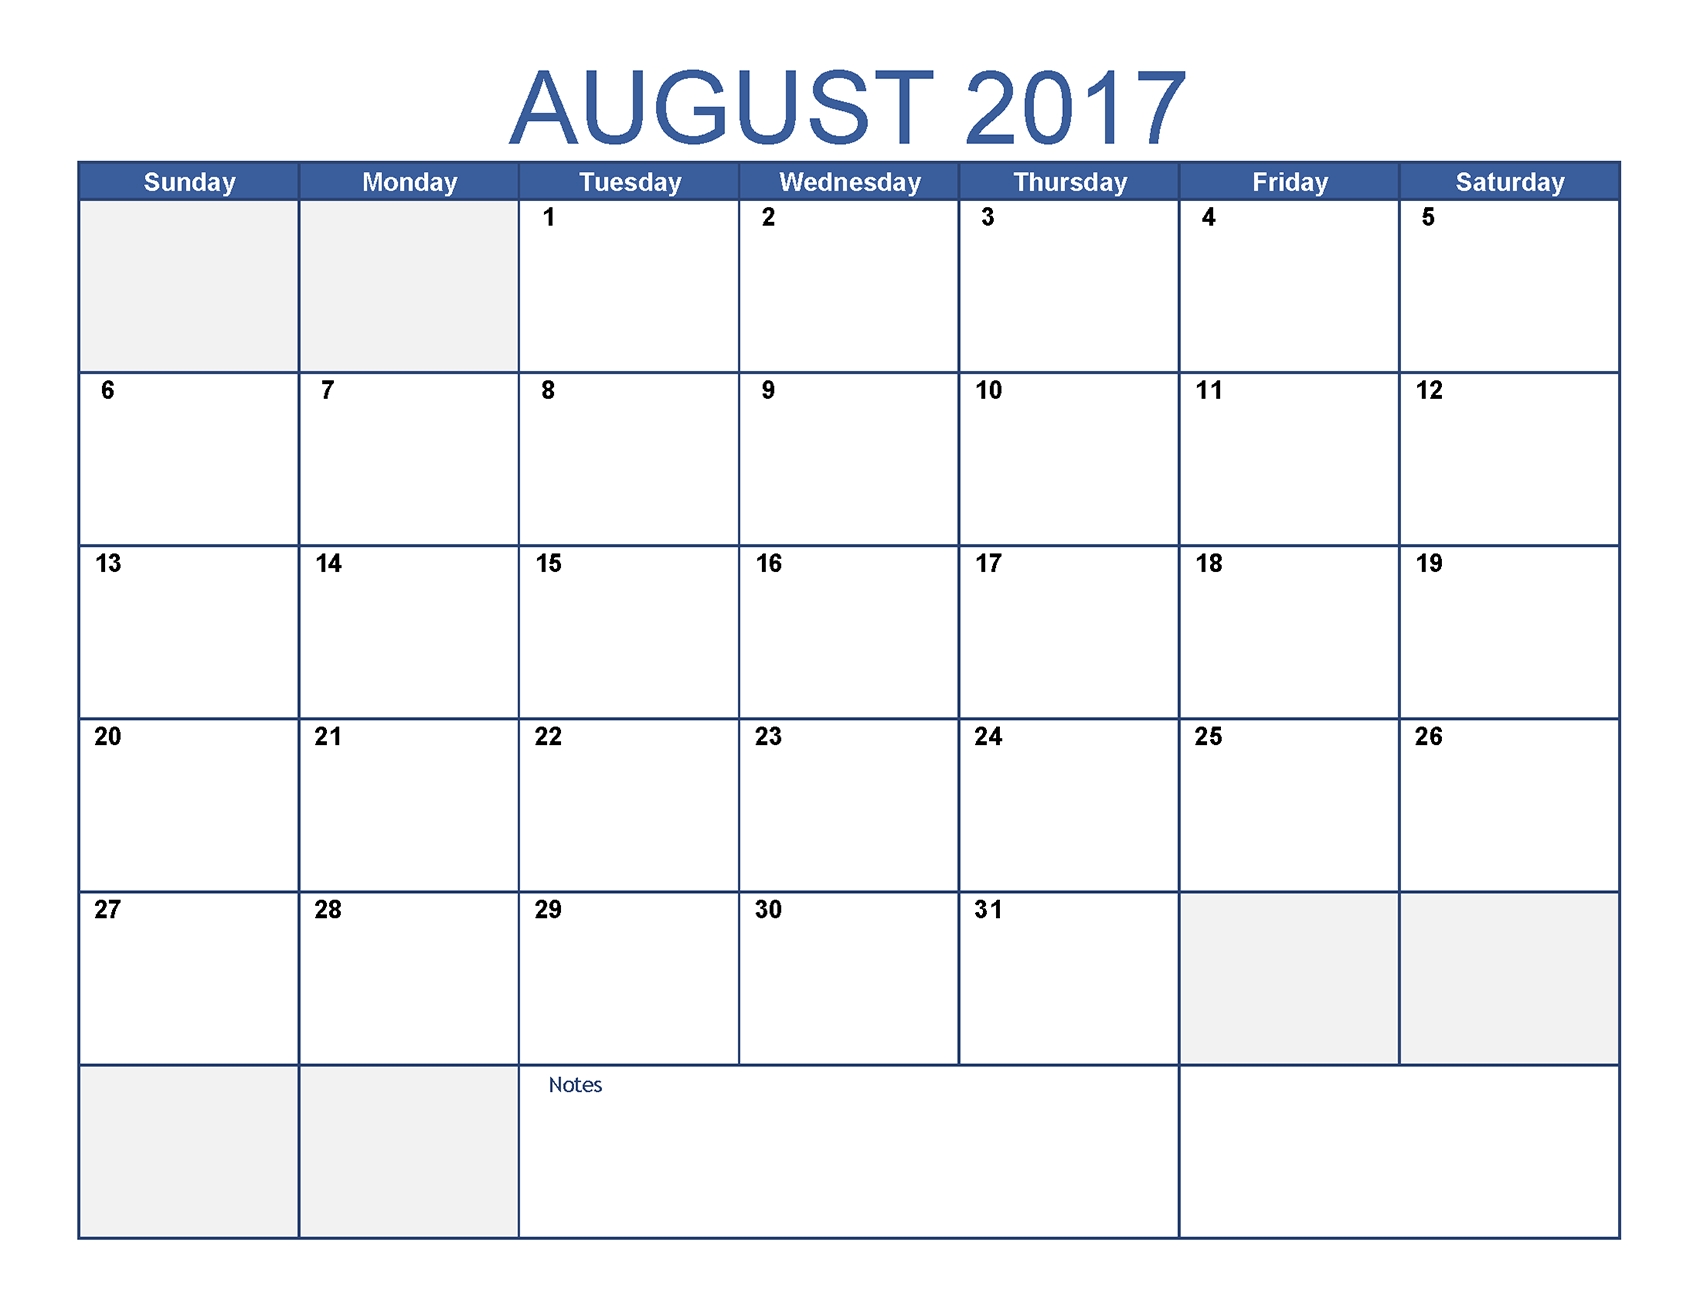 August 2017 Calendar With Holidays - Printable Monthly Calendar Calendar Holidays For August